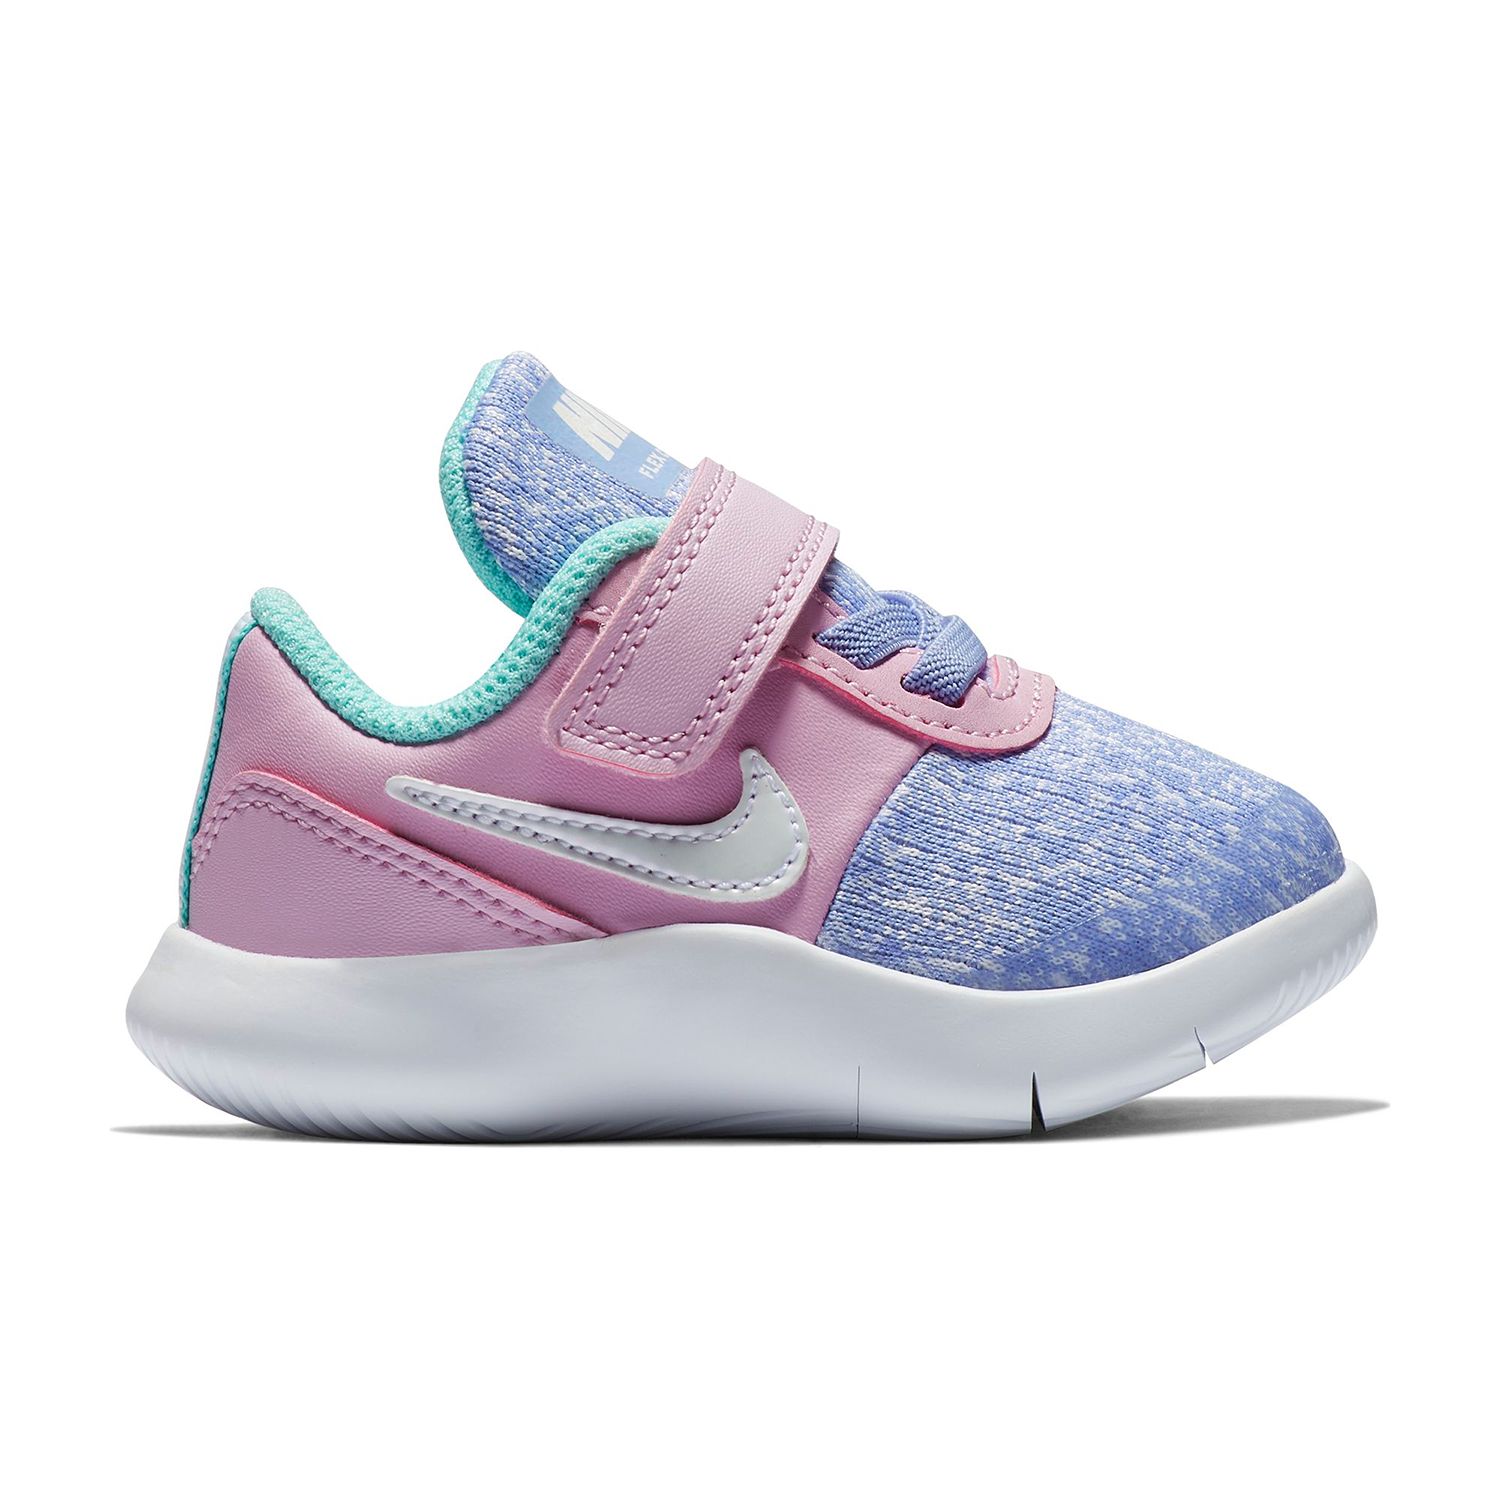 Nike Flex Contact Toddler Girls' Shoes